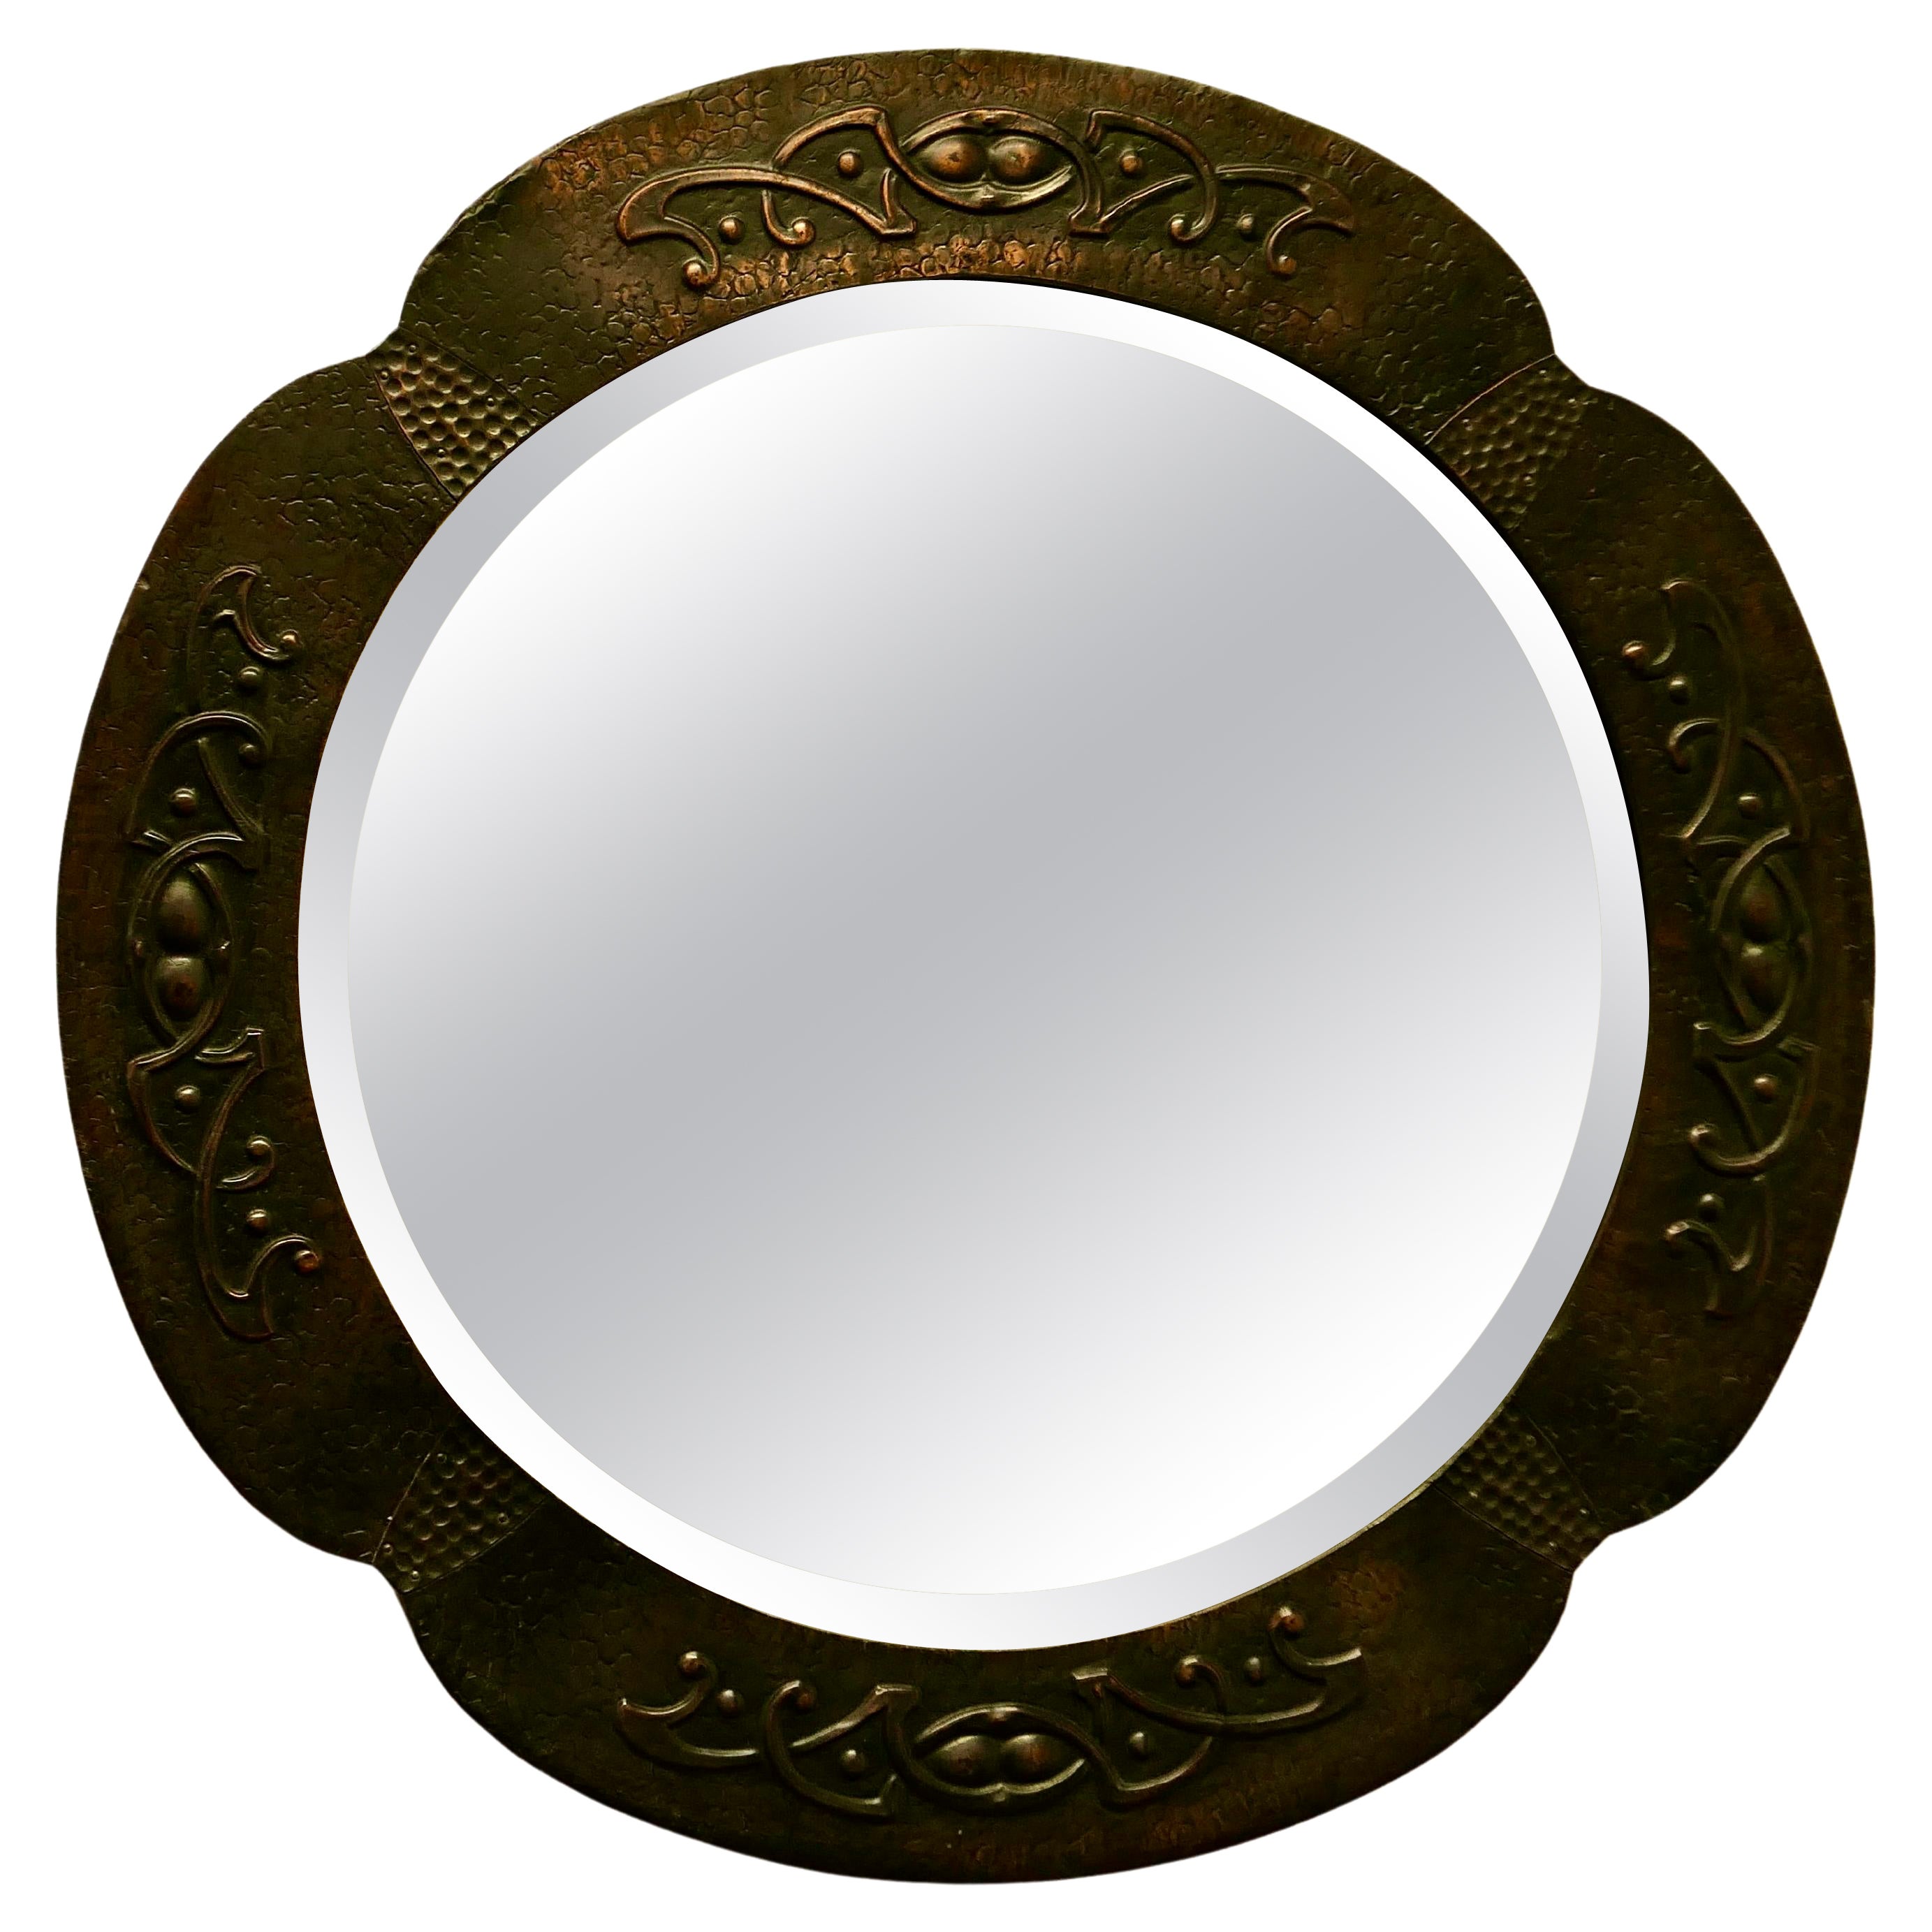 Beautiful Art Nouveau Round Copper Wall Mirror